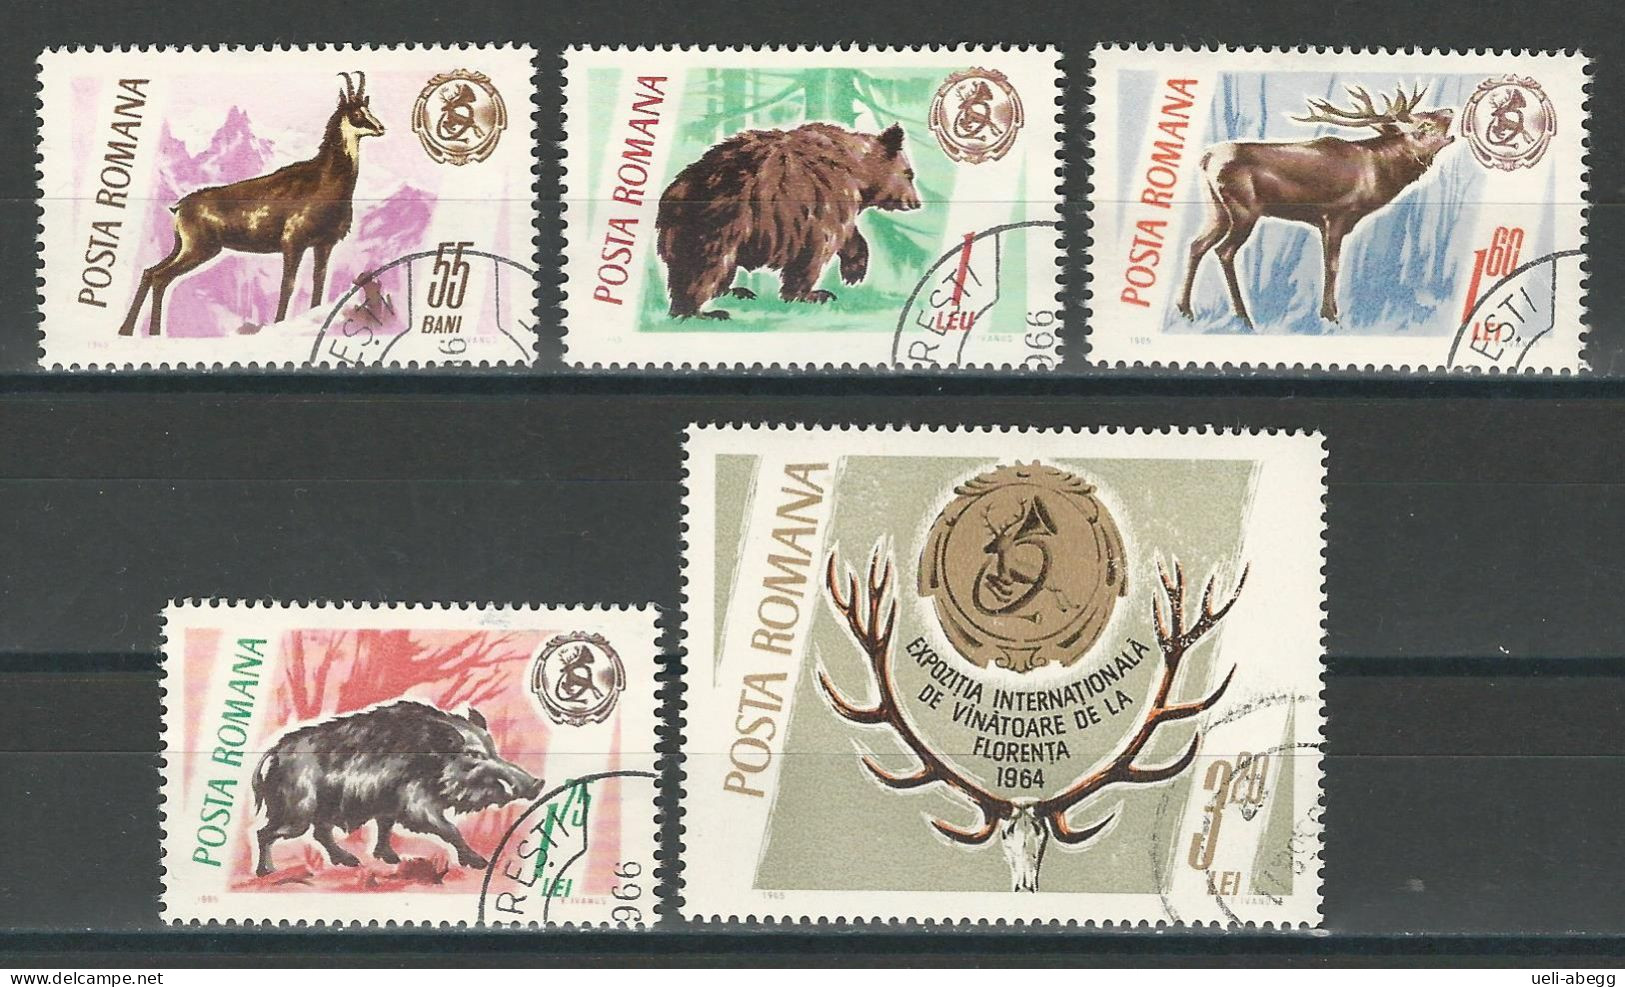 Rumänien Mi 2464-64 O - Used Stamps